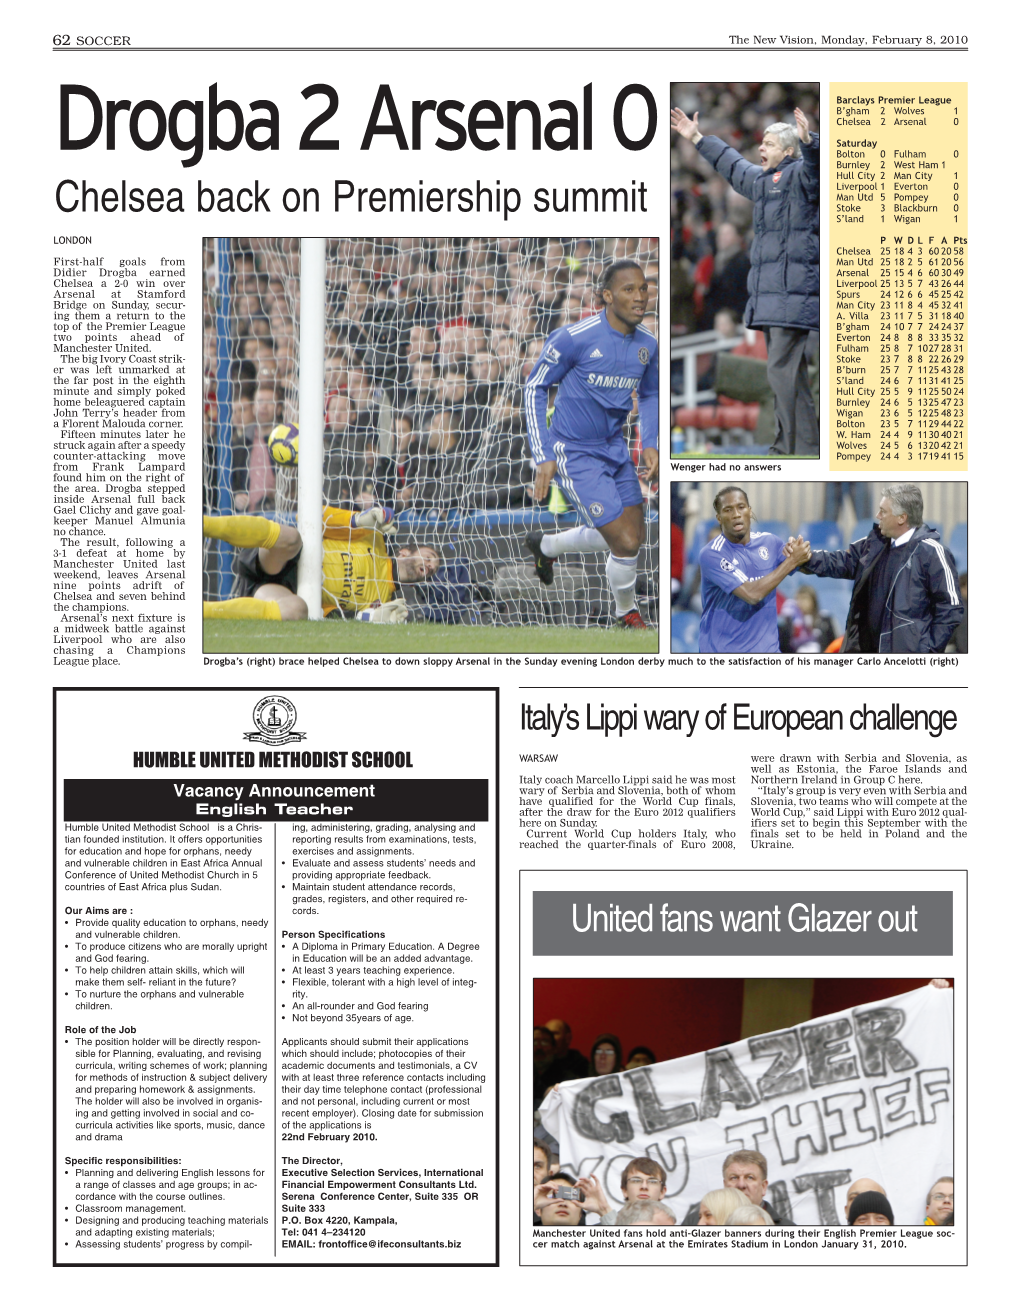 Chelsea Back on Premiership Summit Stoke 3 Blackburn 0 S’Land 1 Wigan 1